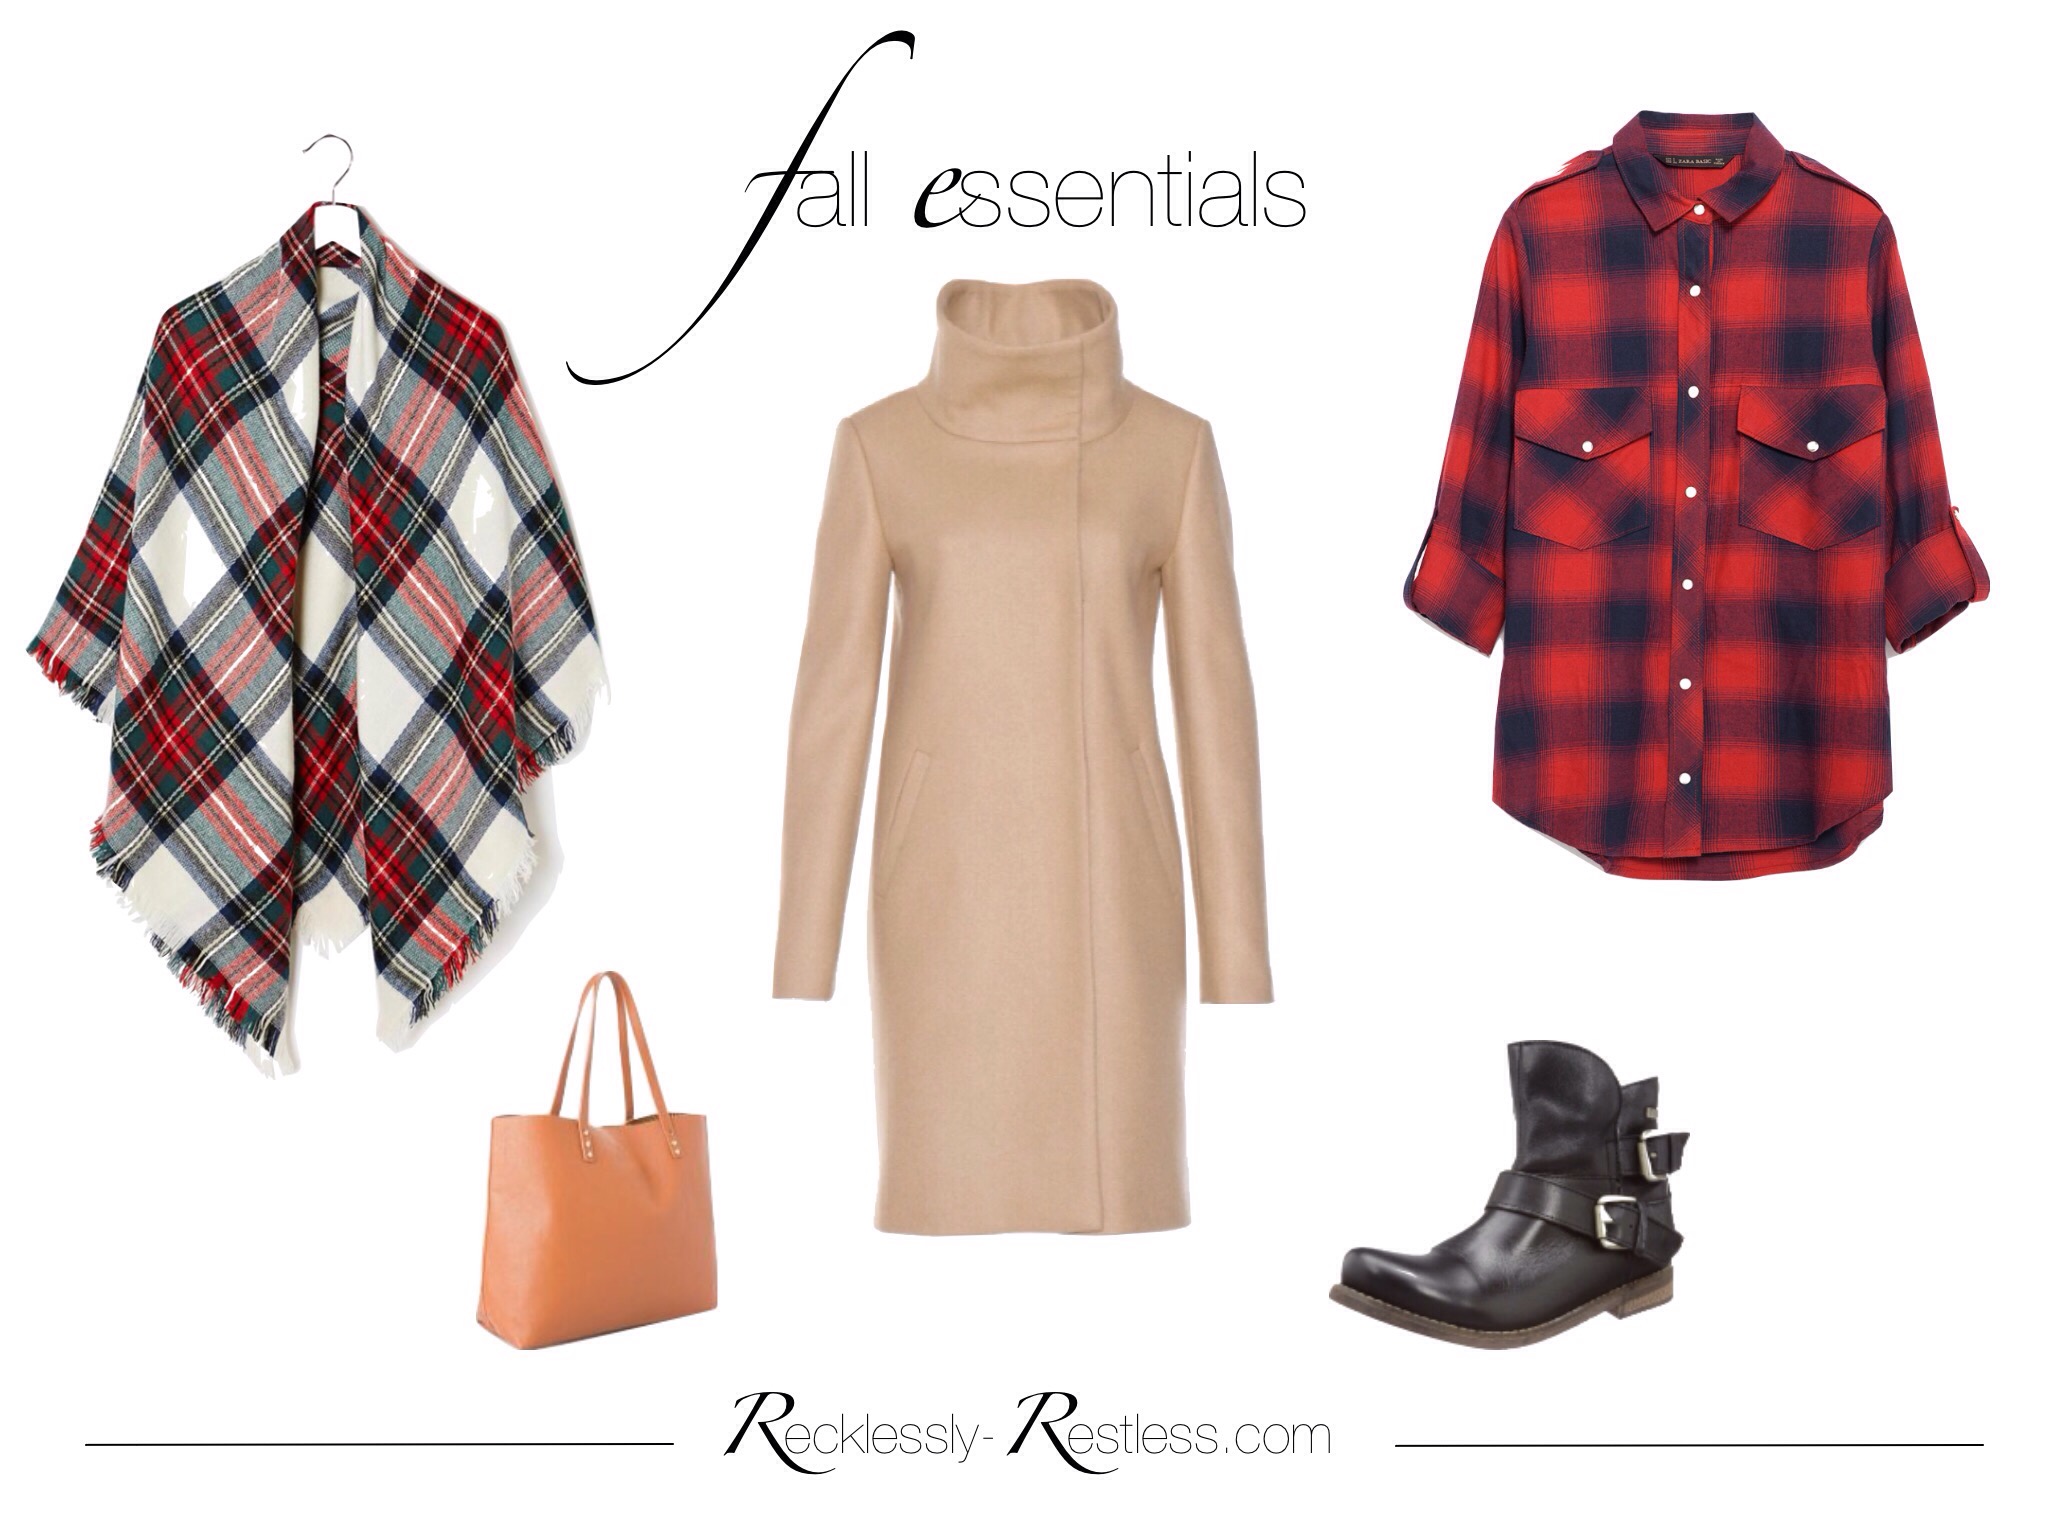 Fall Essentials - 5 Modeklassiker für den Herbst